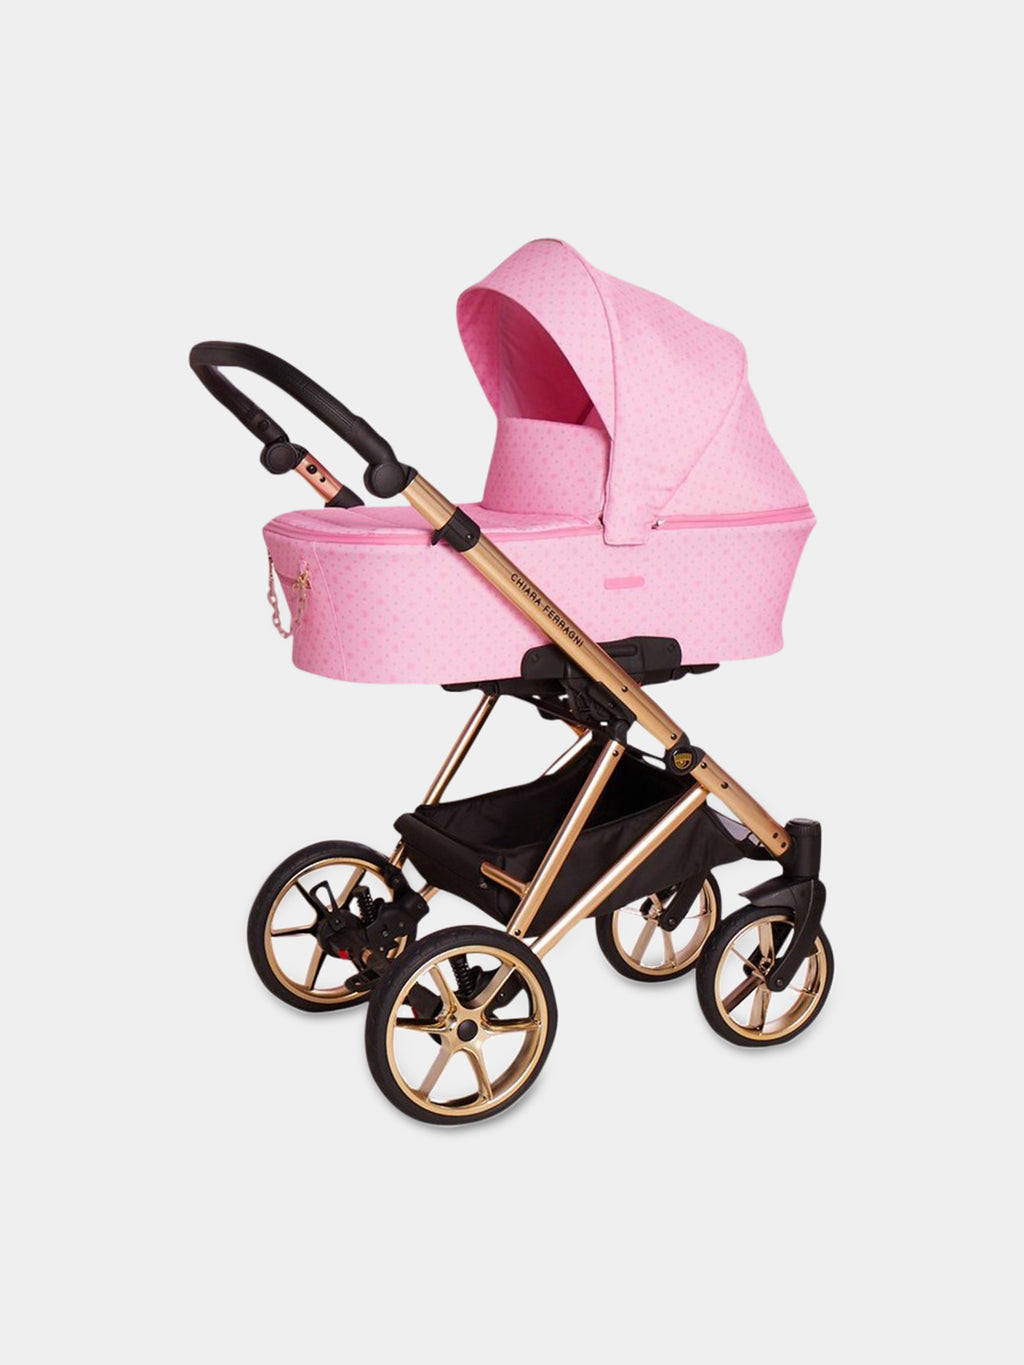 Golden Trio-stroller for baby girl with logo